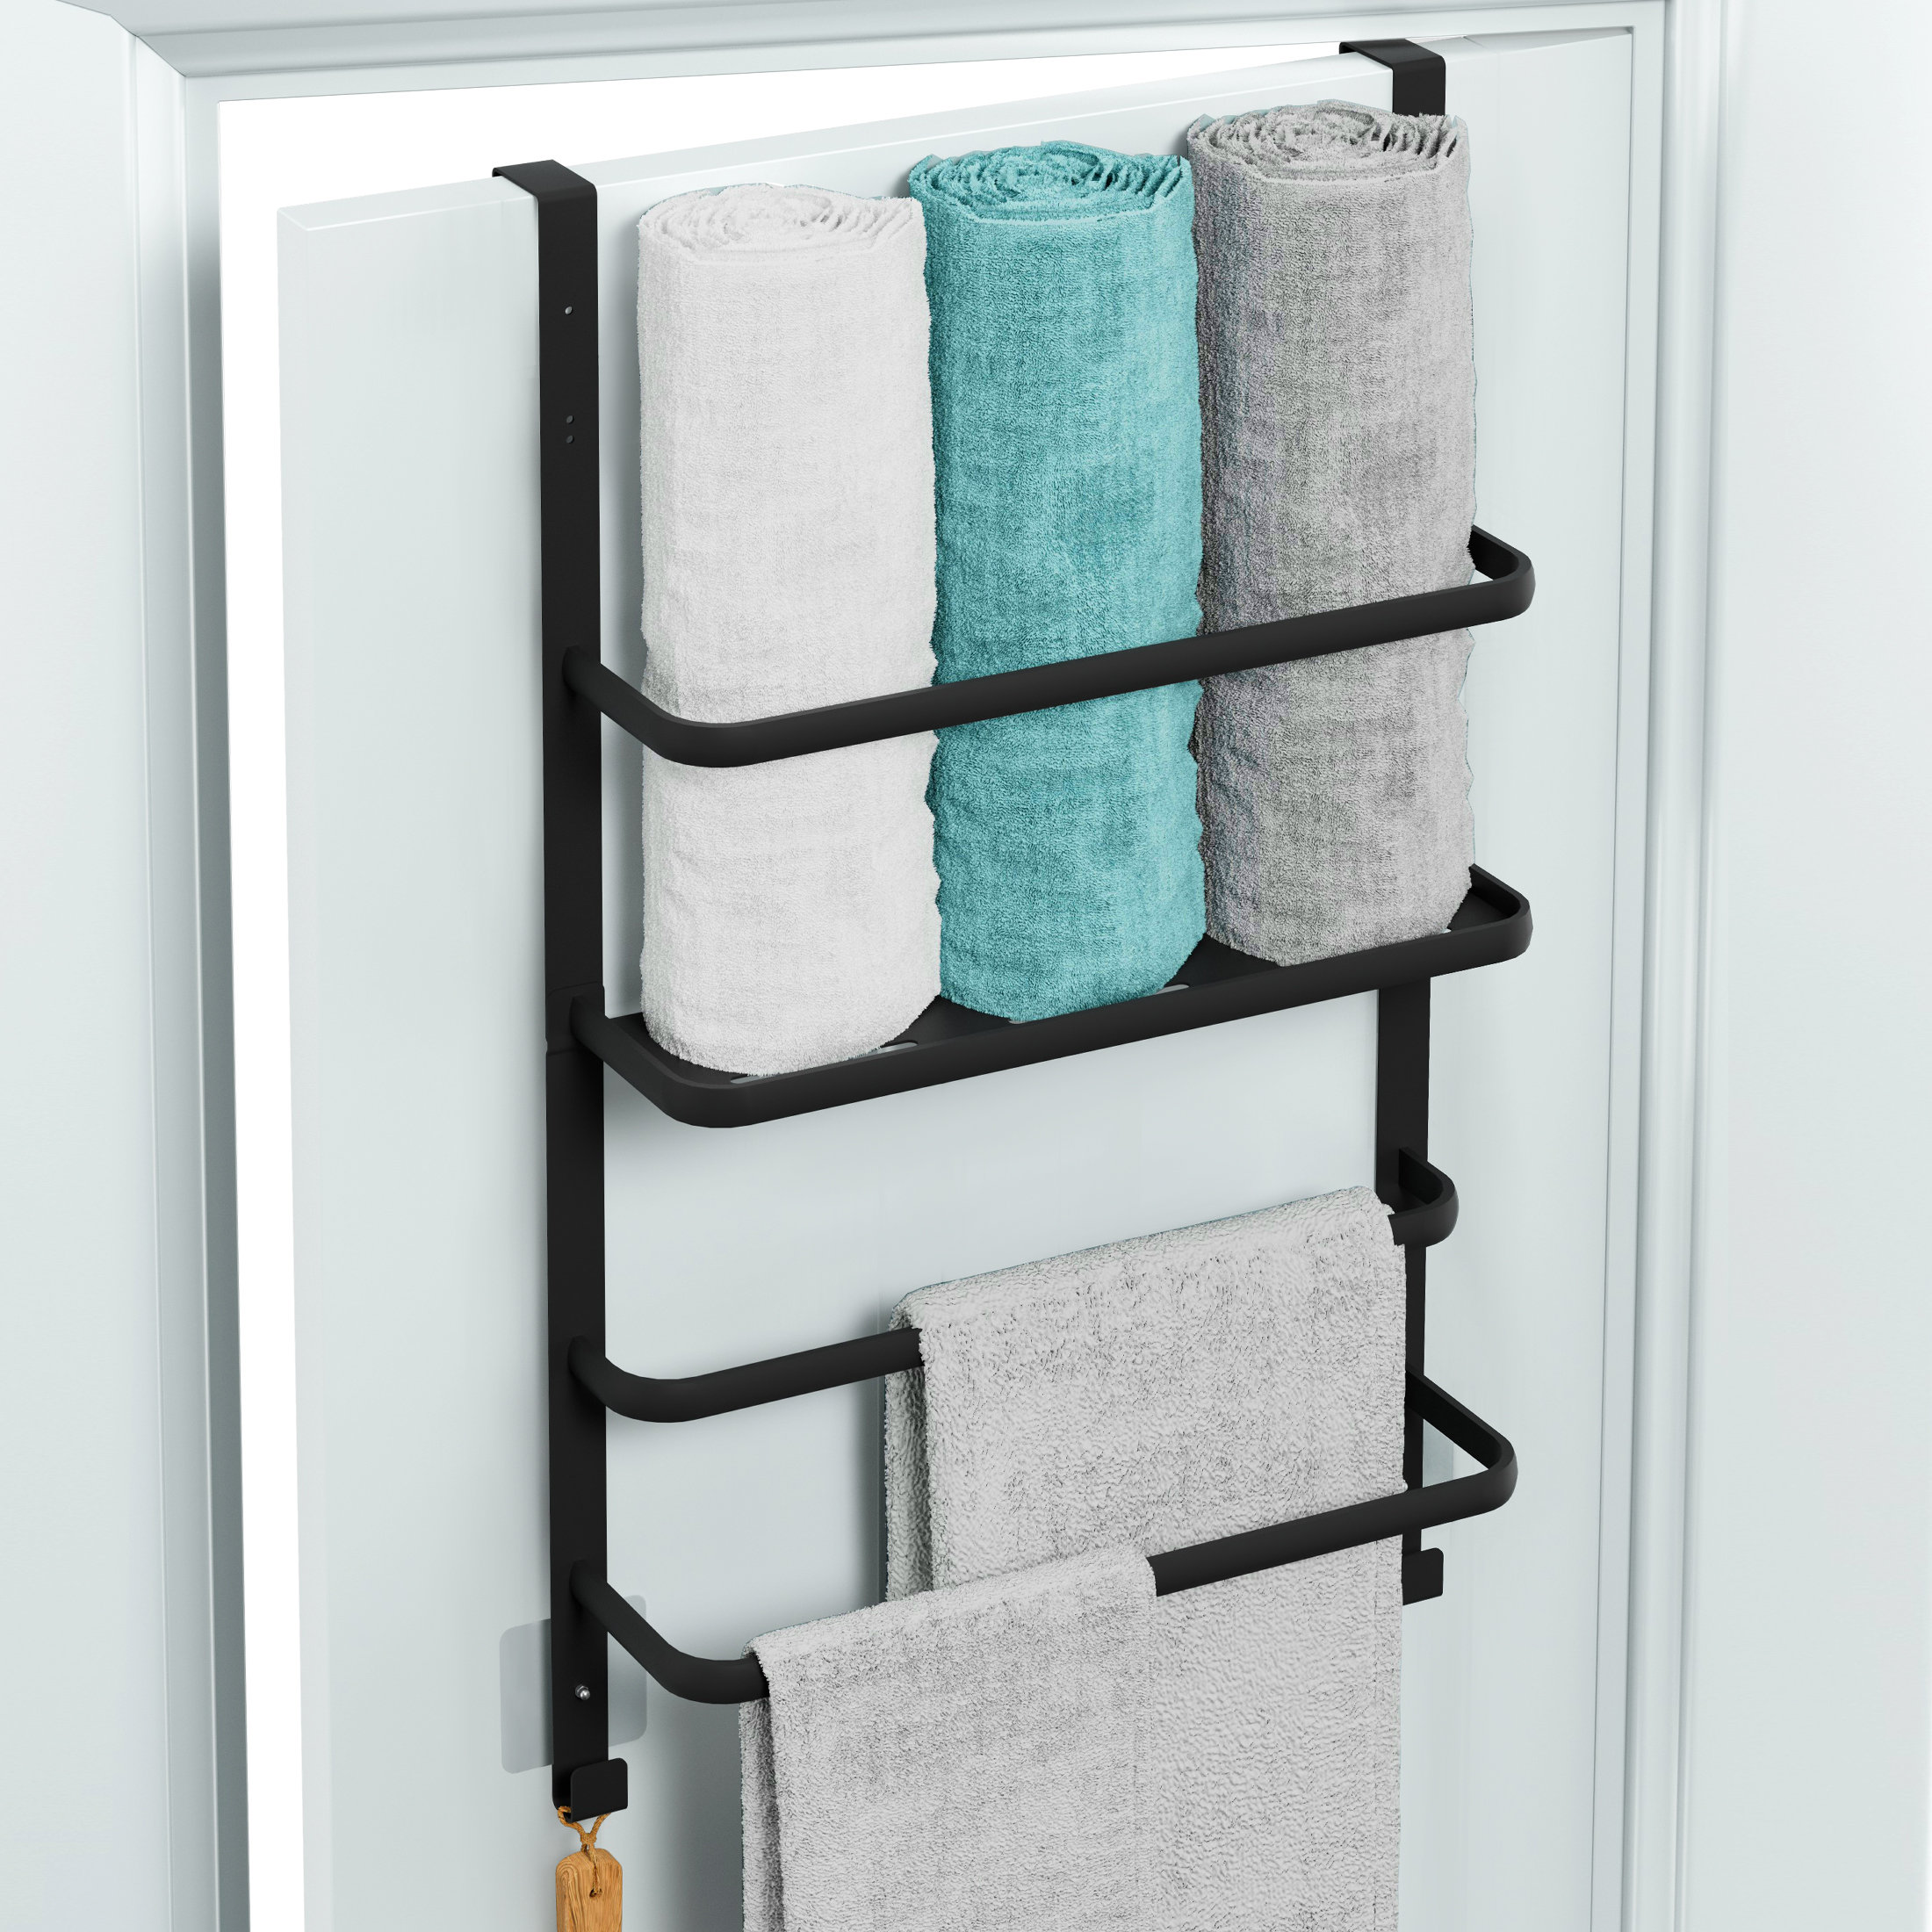 Bathroom Storage Organizer Wall Mounted, 3 Tier Bathroom Towel Rack Shelf with Storage Drawer Double Towel Bars and Hooks, Industrial Bathroom